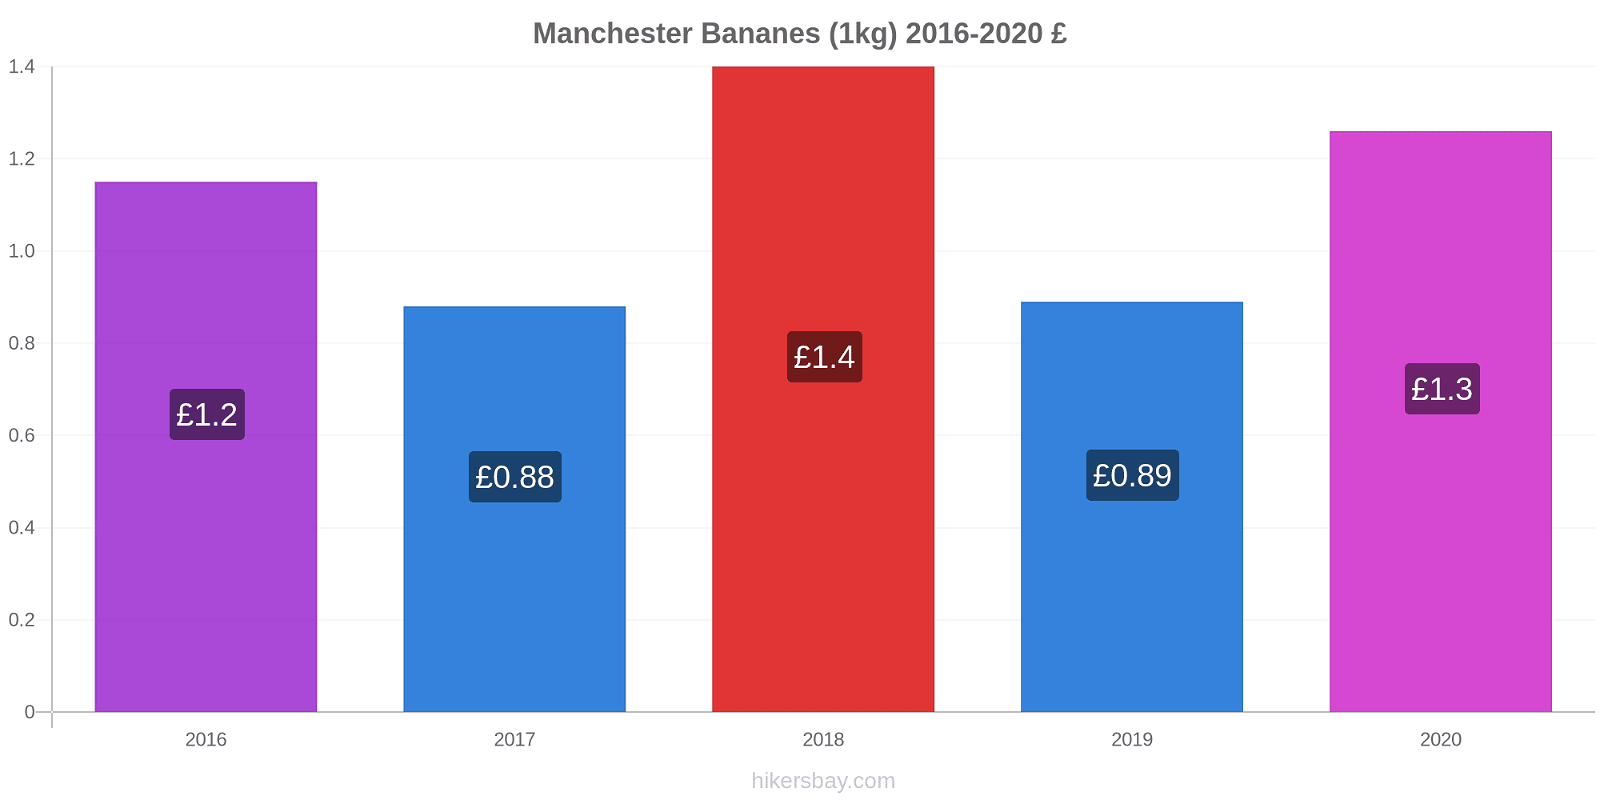 Manchester changements de prix Bananes (1kg) hikersbay.com